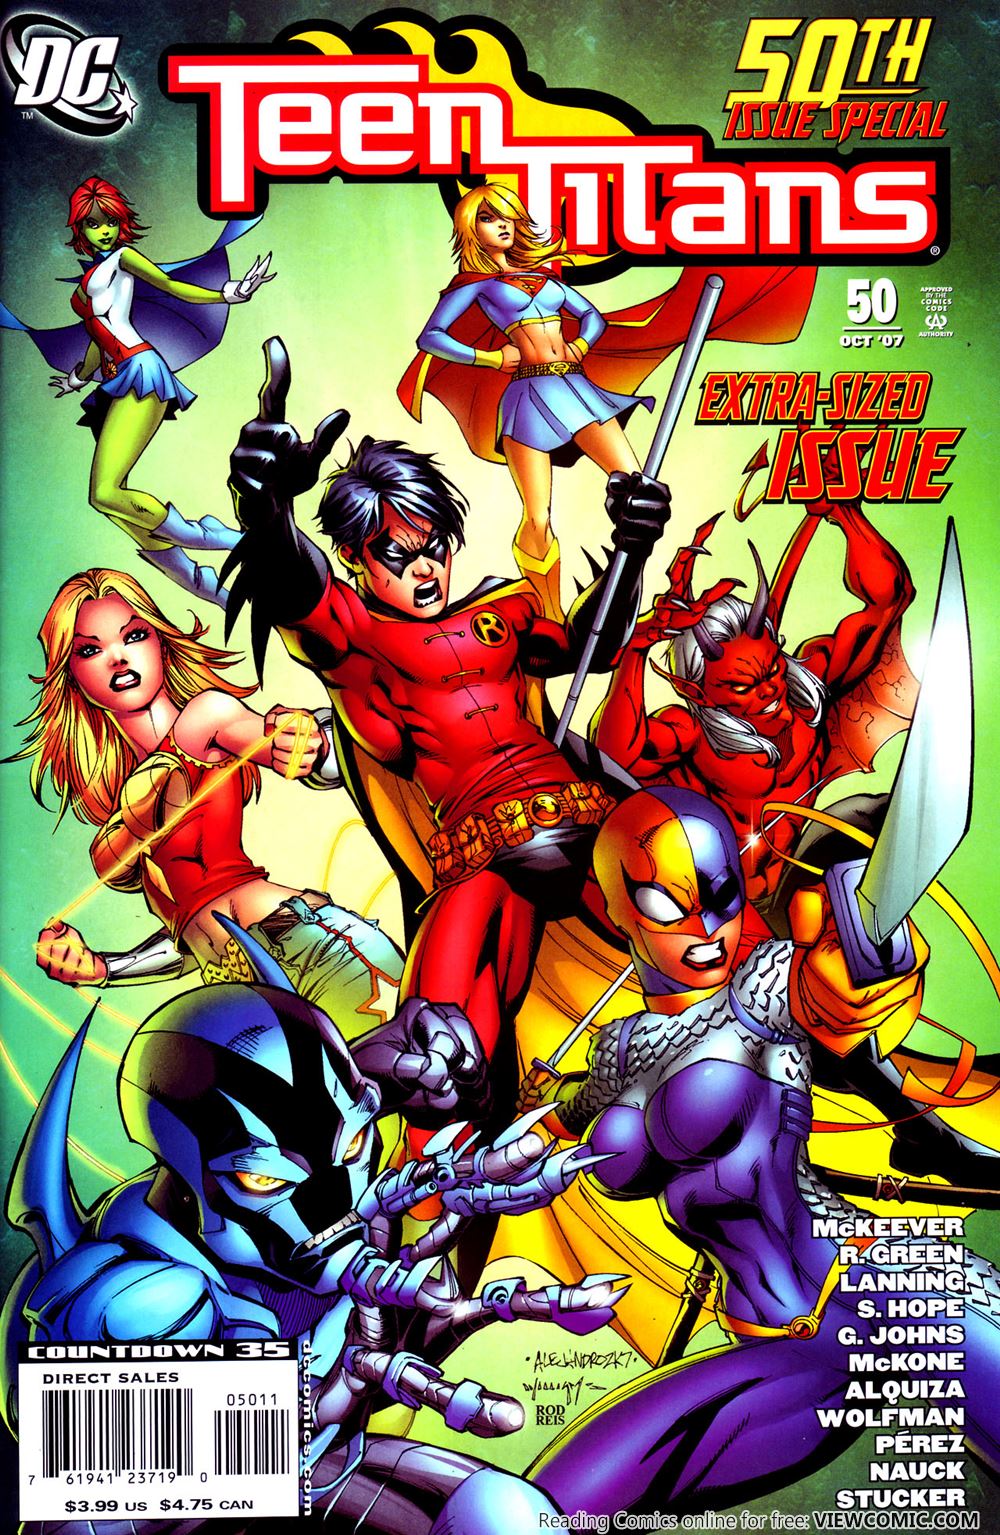 Teen Titans V3 050 Read Teen Titans V3 050 Comic Online In High Quality Read Full Comic